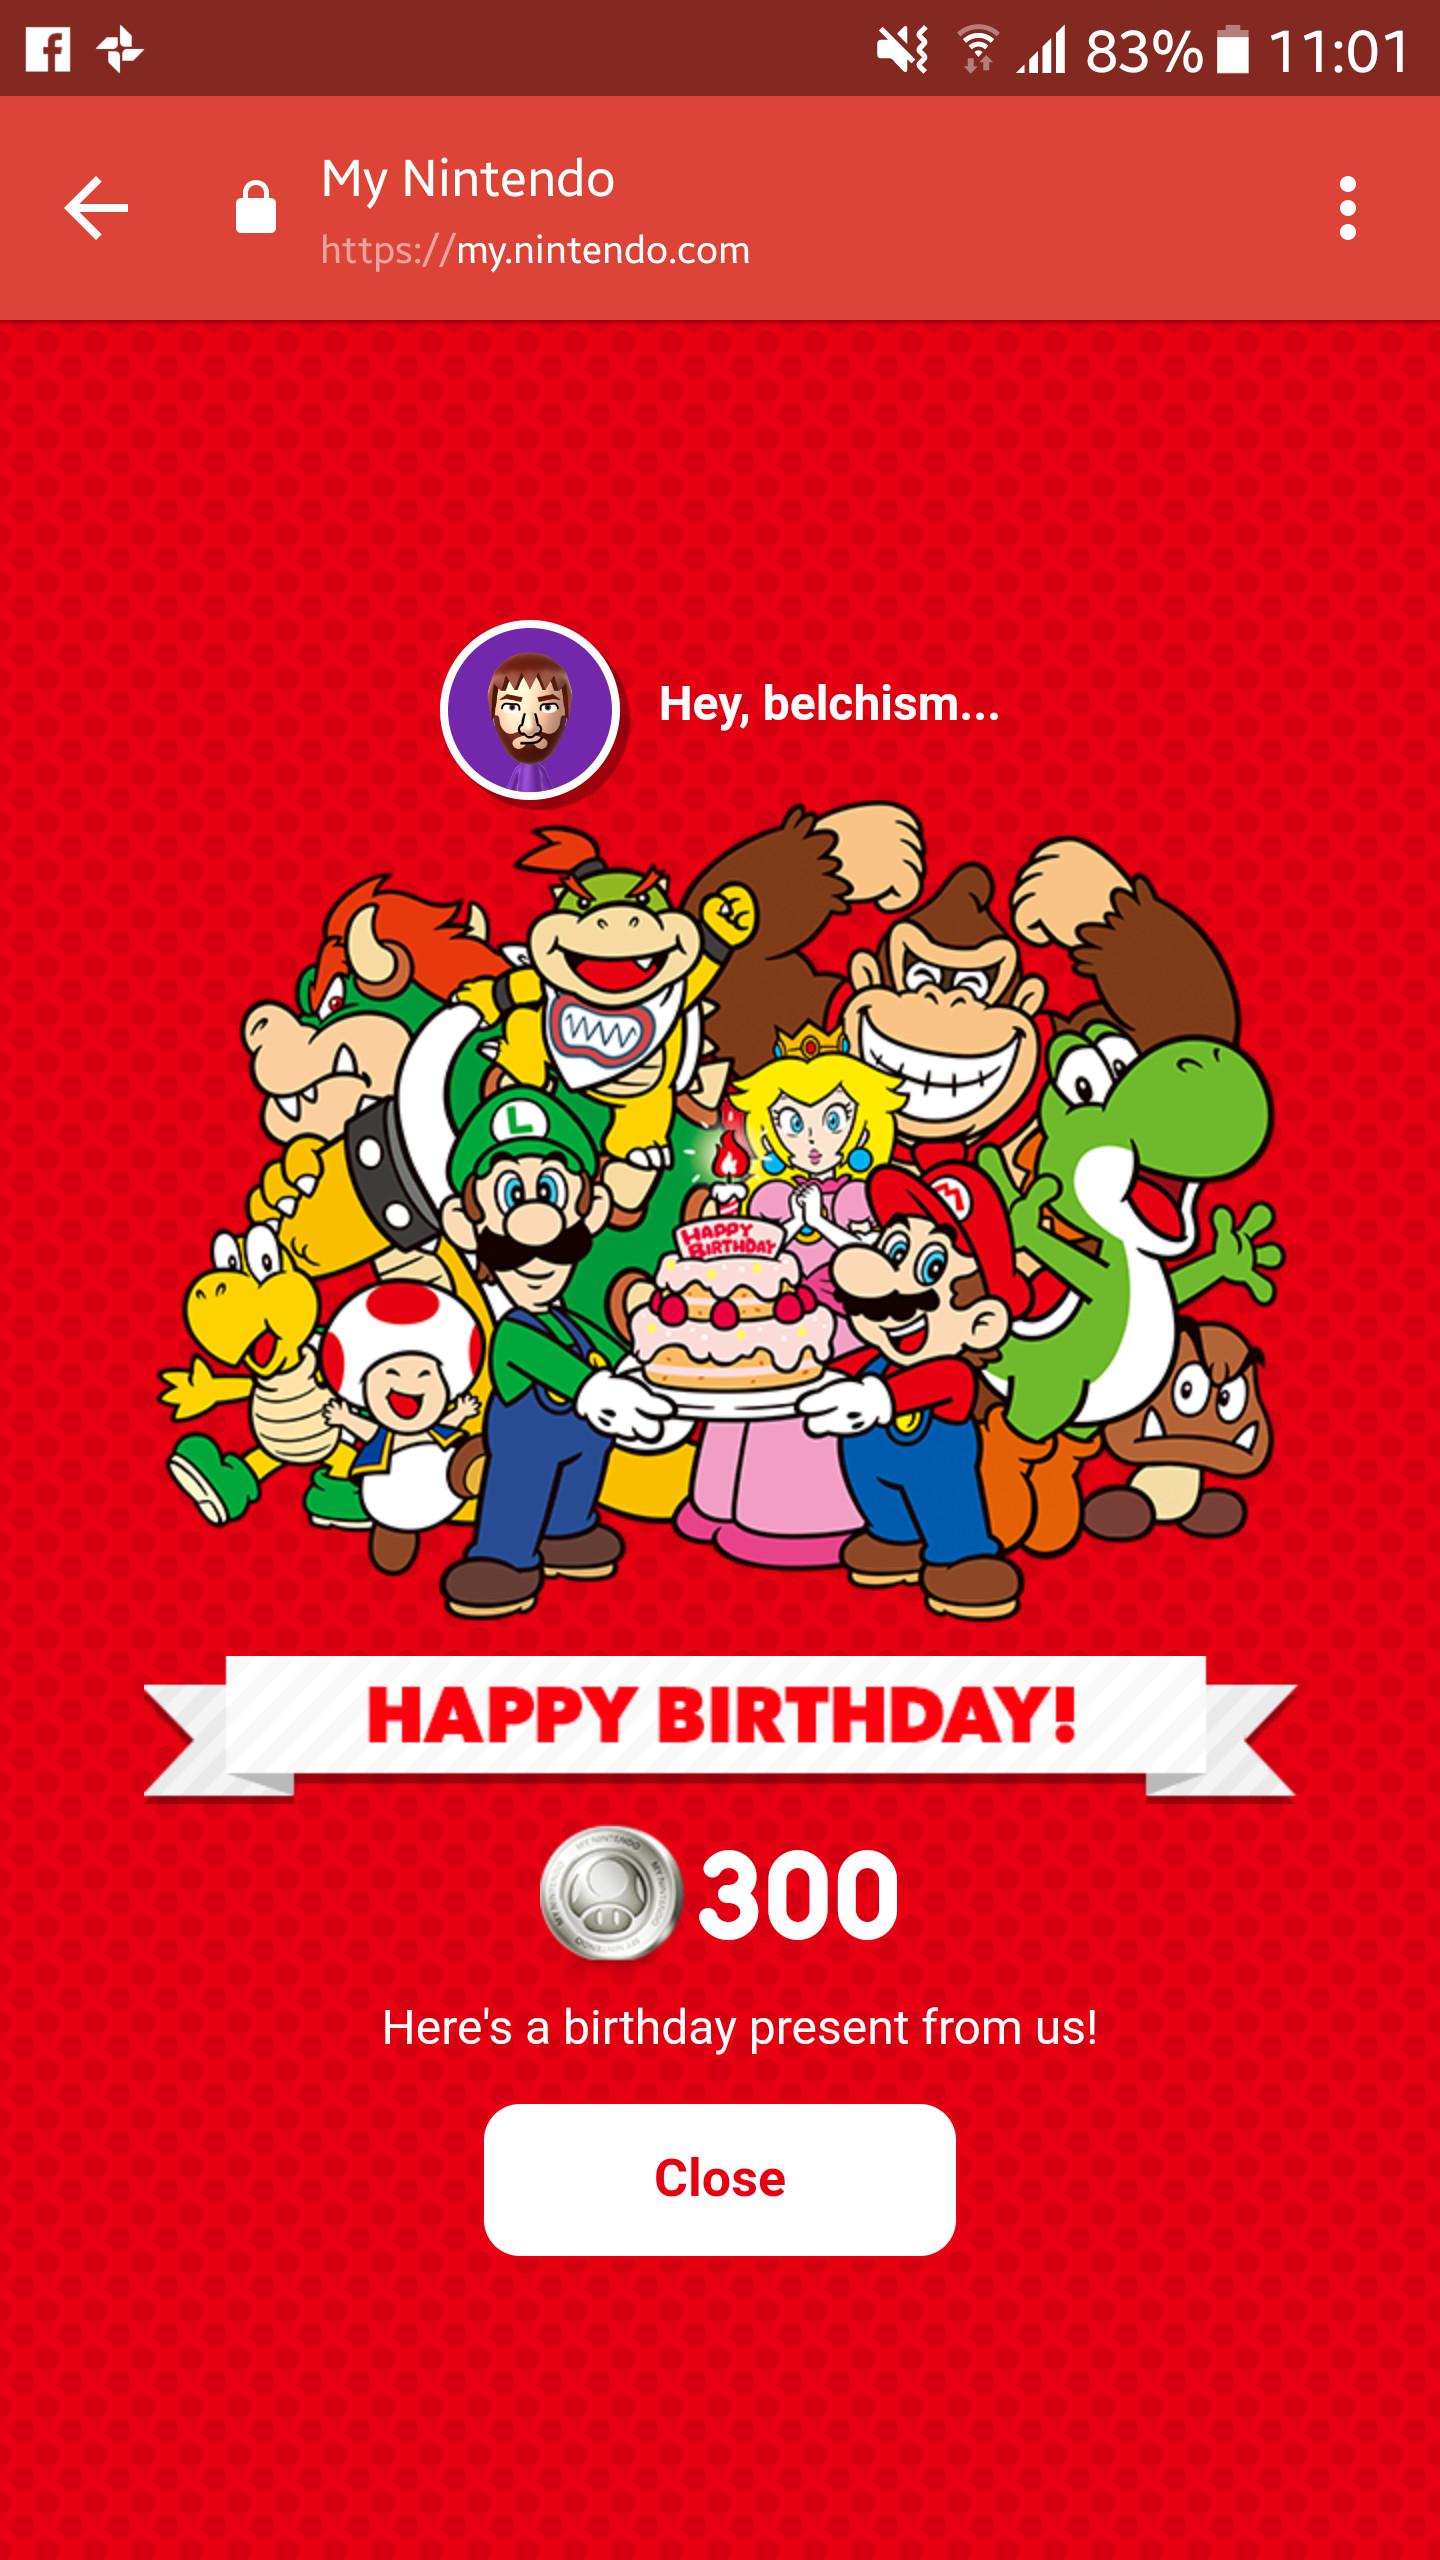 Today Is My Birthday Wallpaper - Happy Birthday From Nintendo - HD Wallpaper 